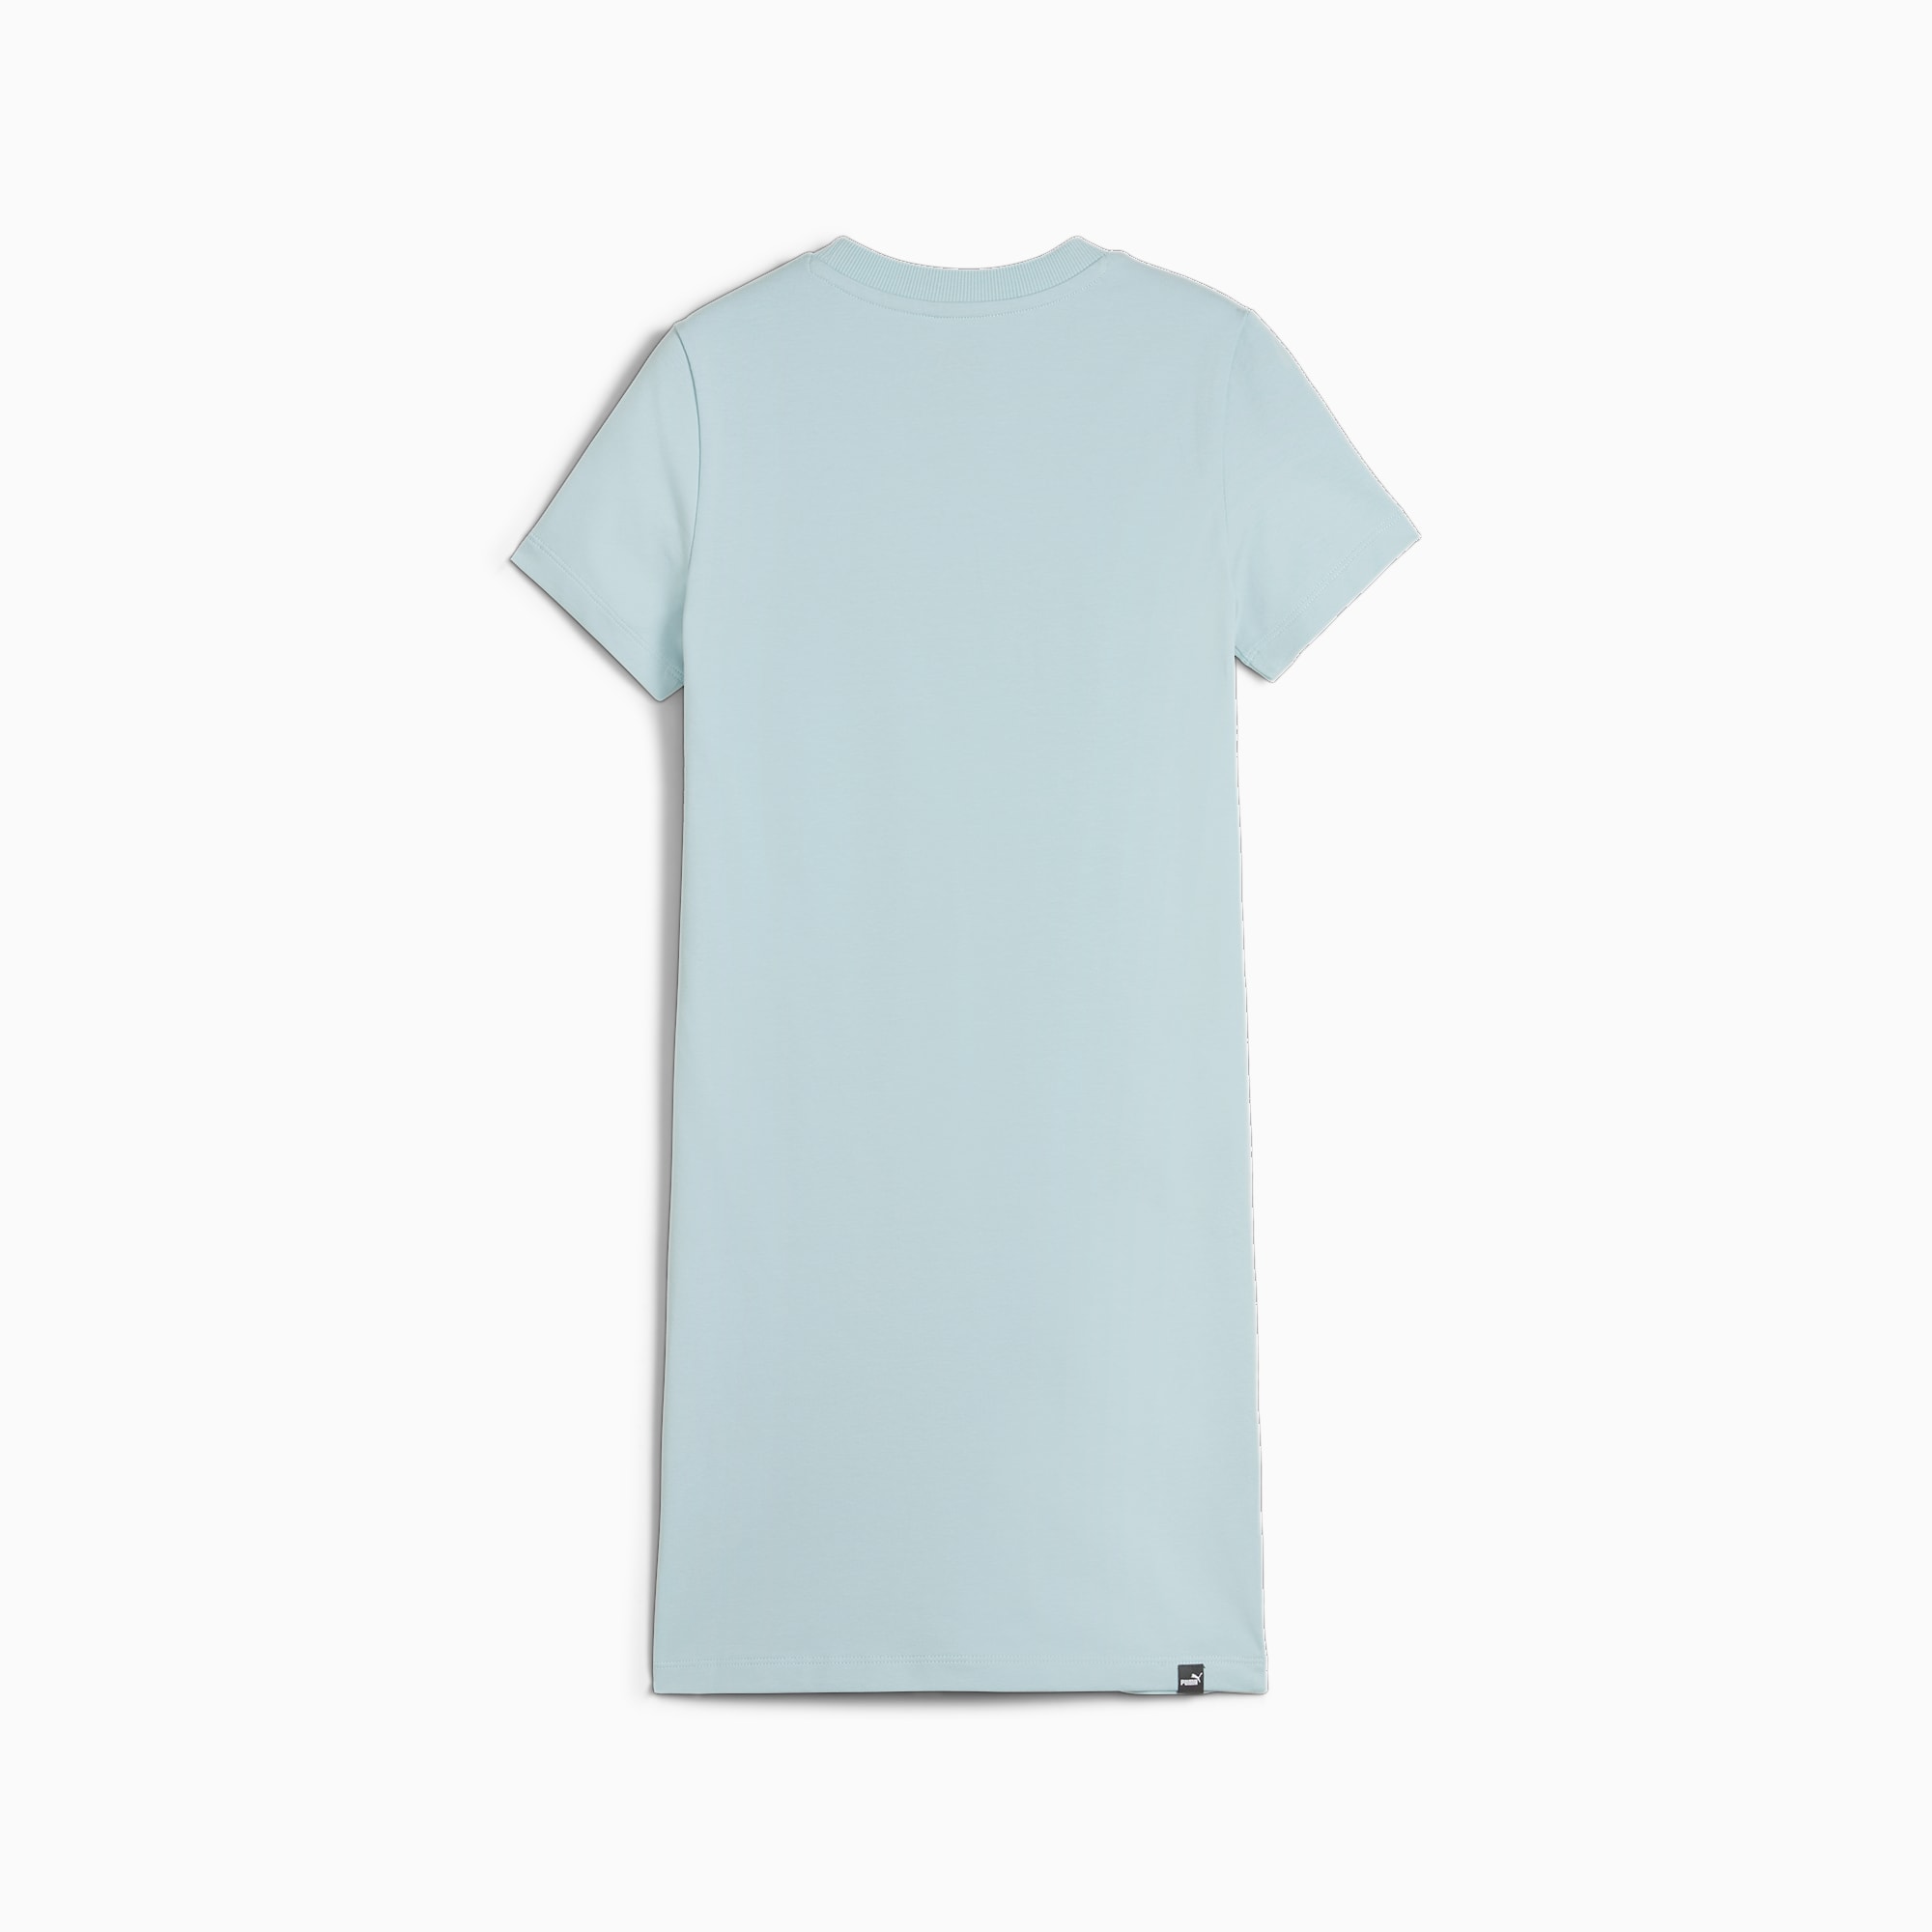 PUMA Ess+ Blossom Girls' Dress, Turquoise Surf, Size 176, Clothing